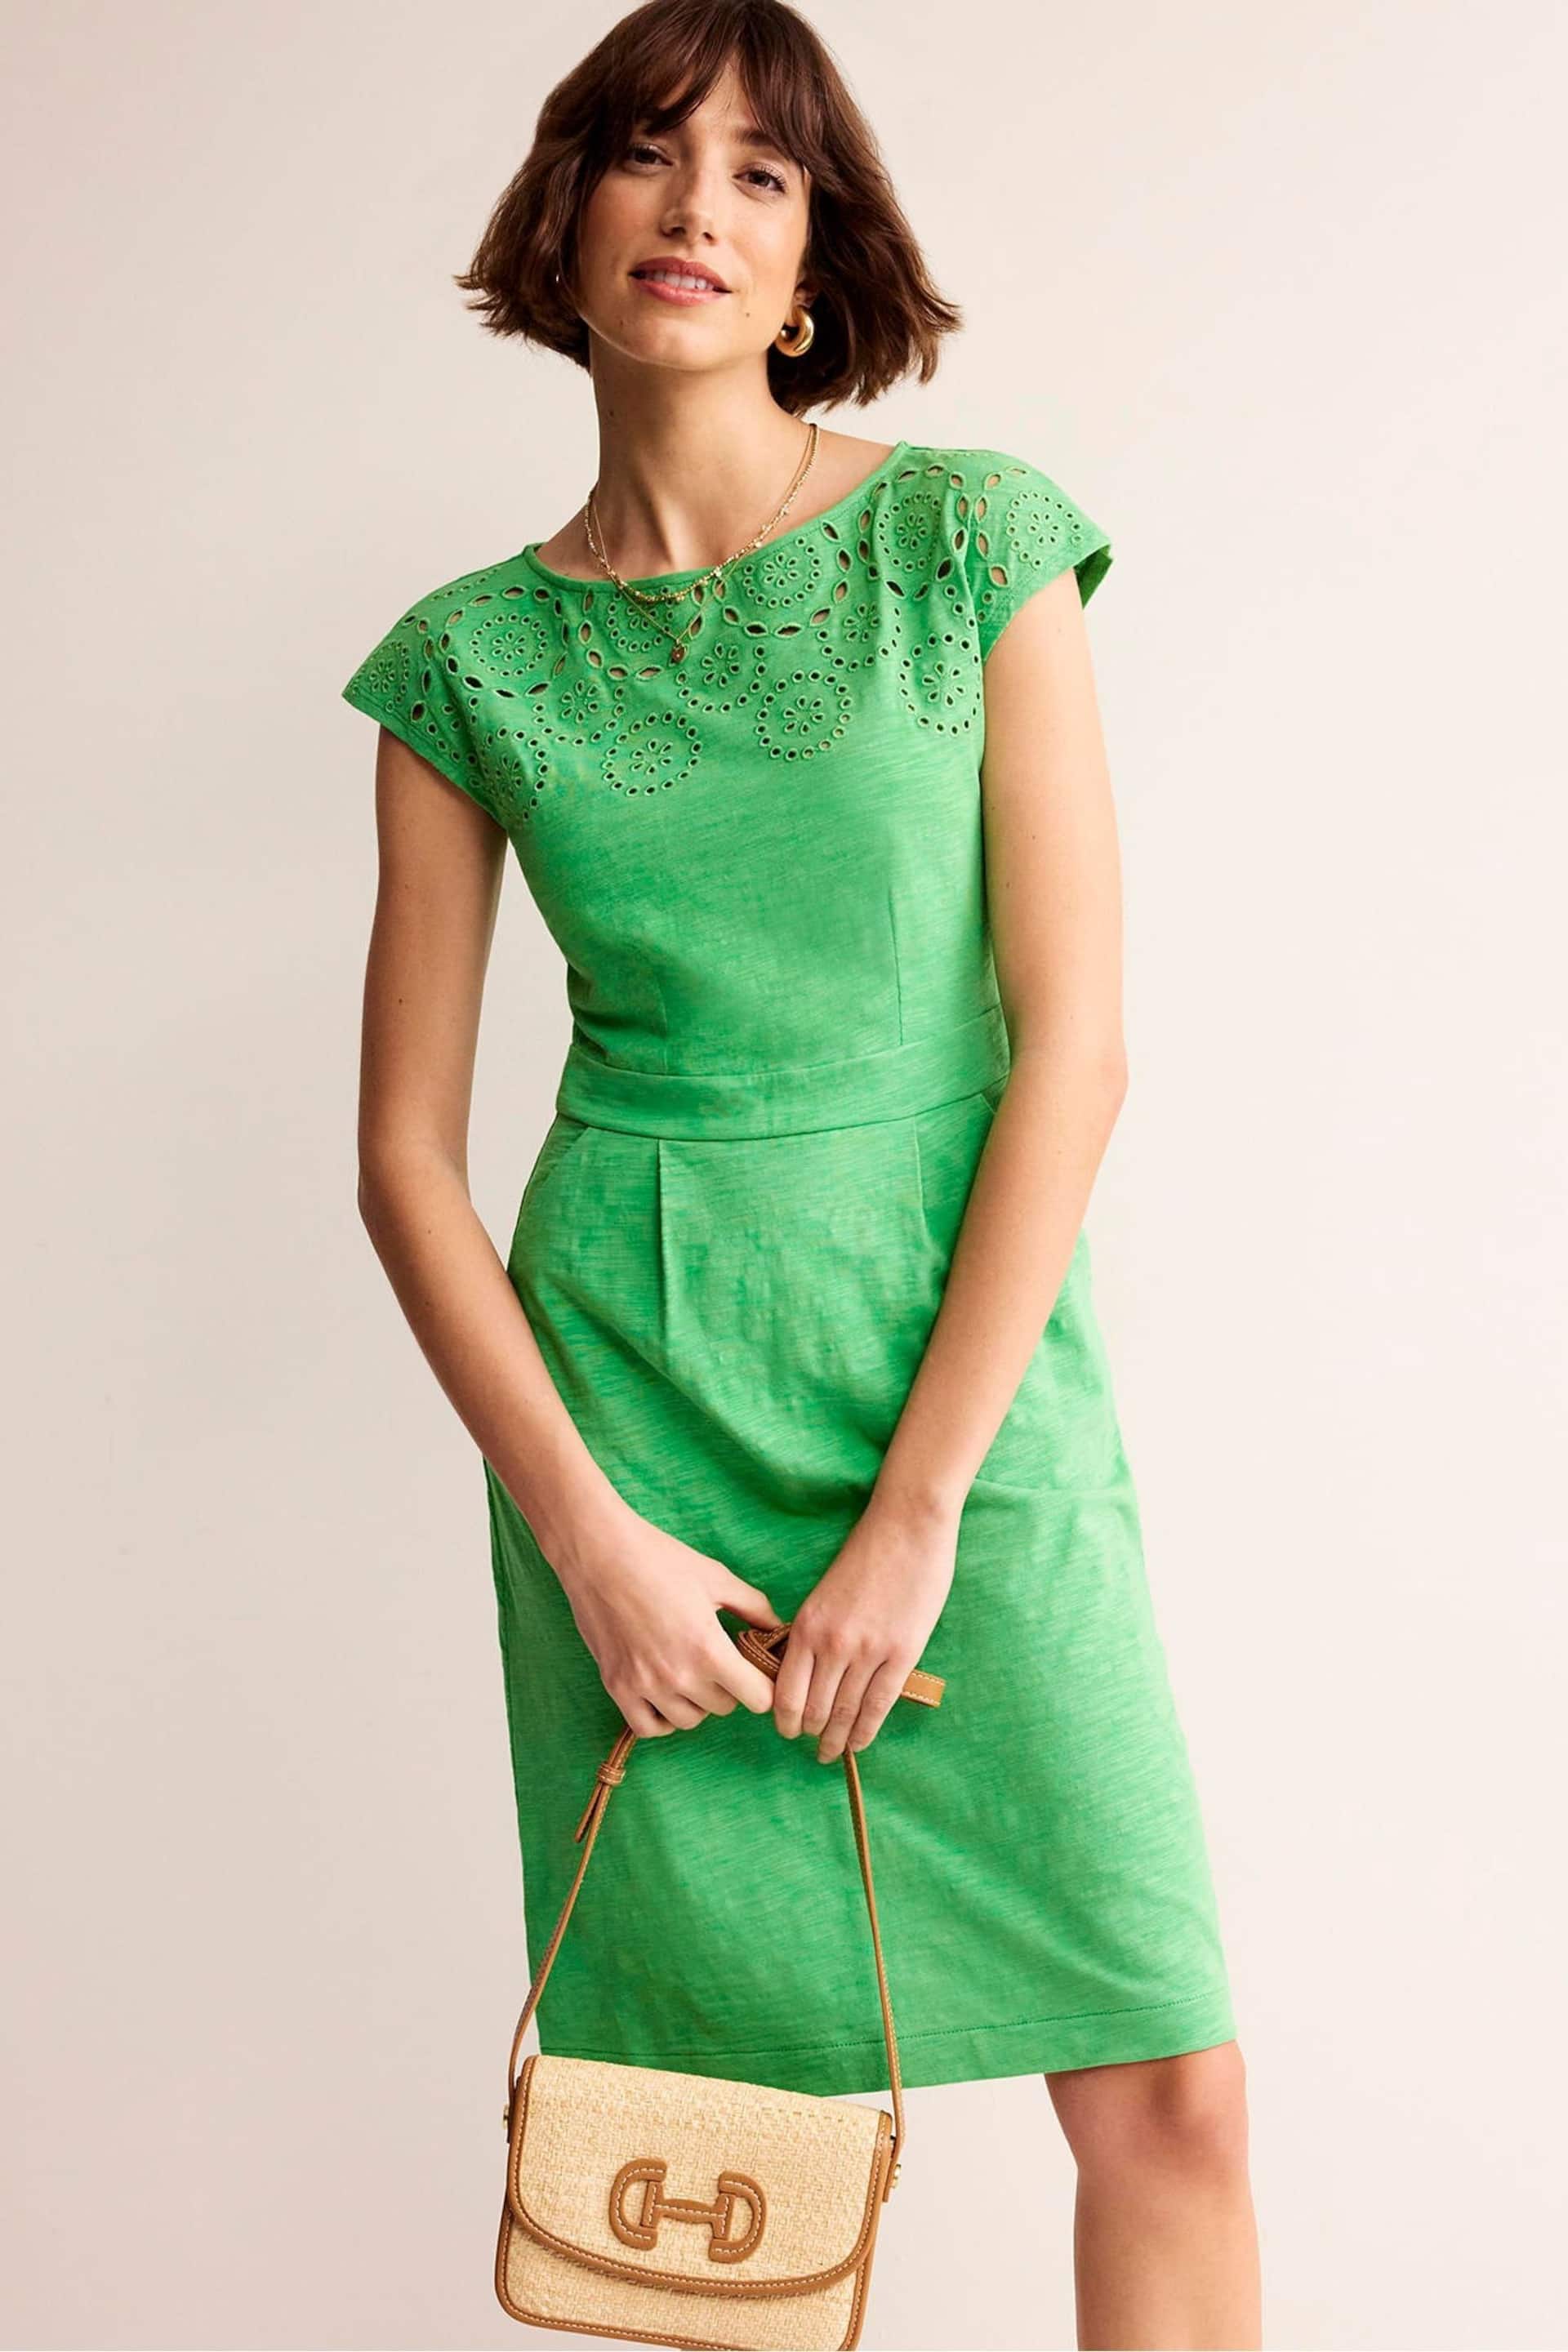 Boden Green Petite Florrie Broderie Jersey Dress - Image 1 of 5